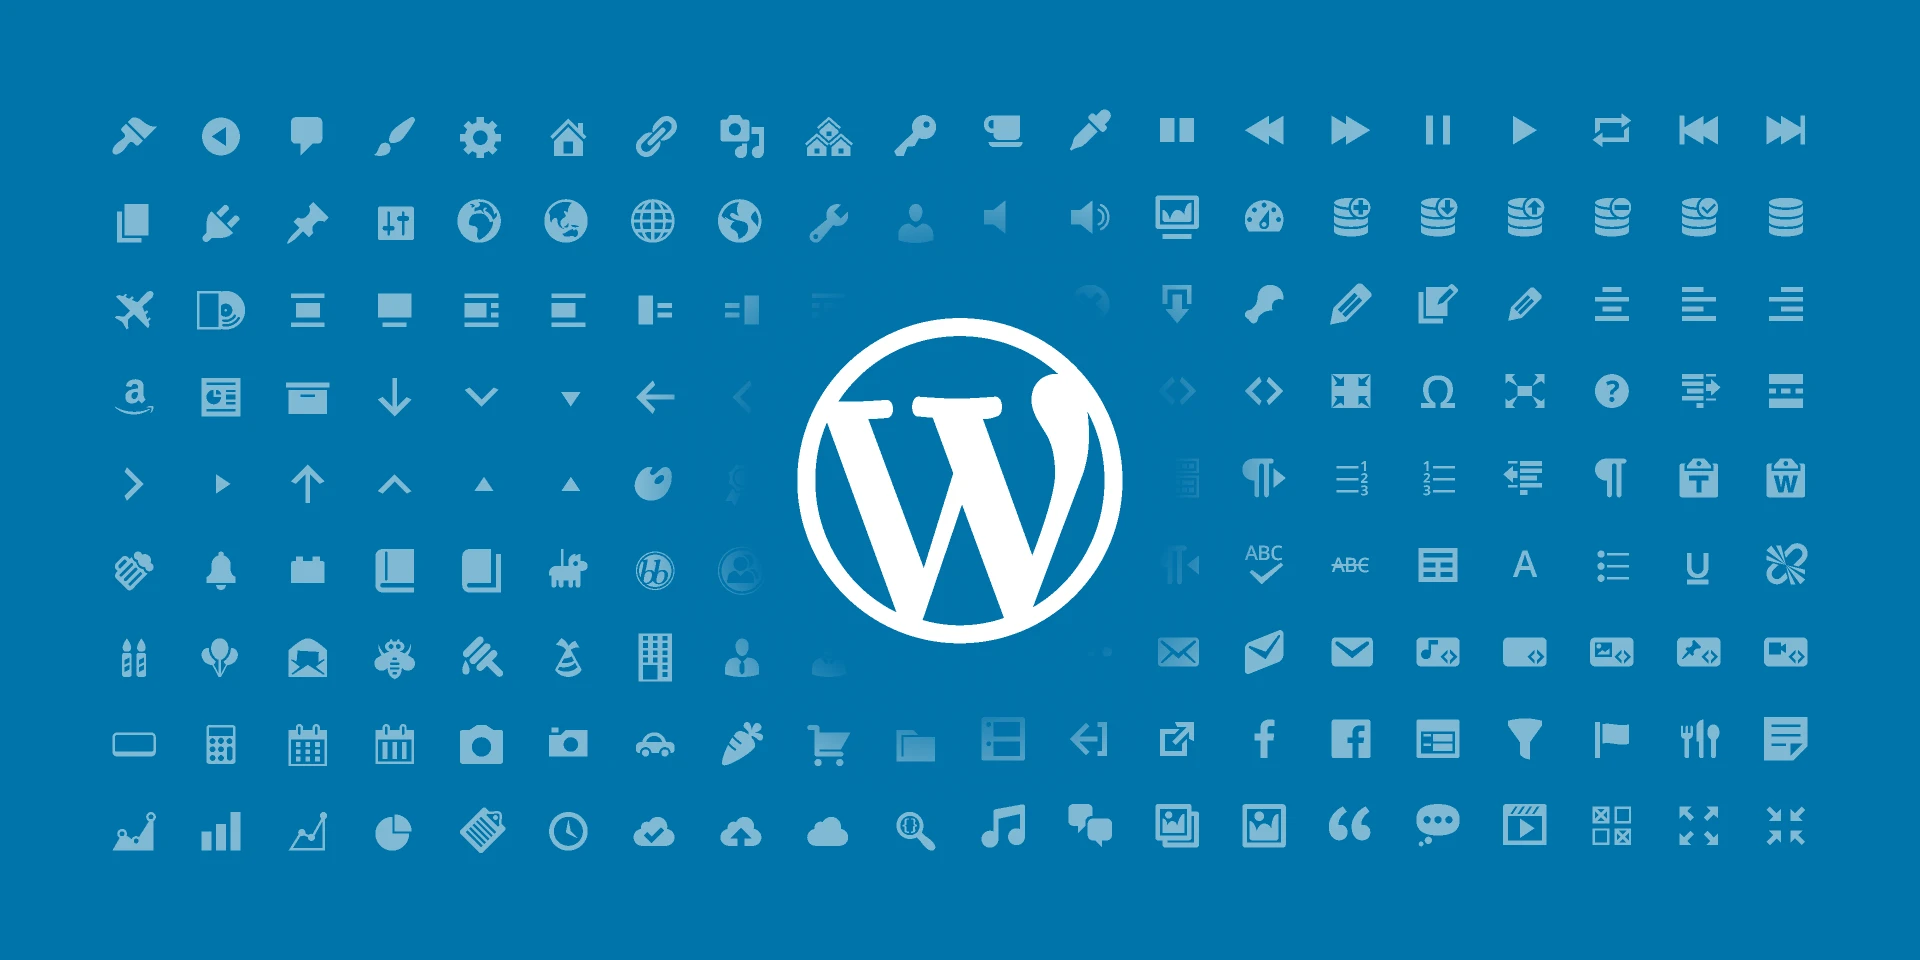 Dashicons  WordPress Icons (WordPress Administration) for Figma and Adobe XD